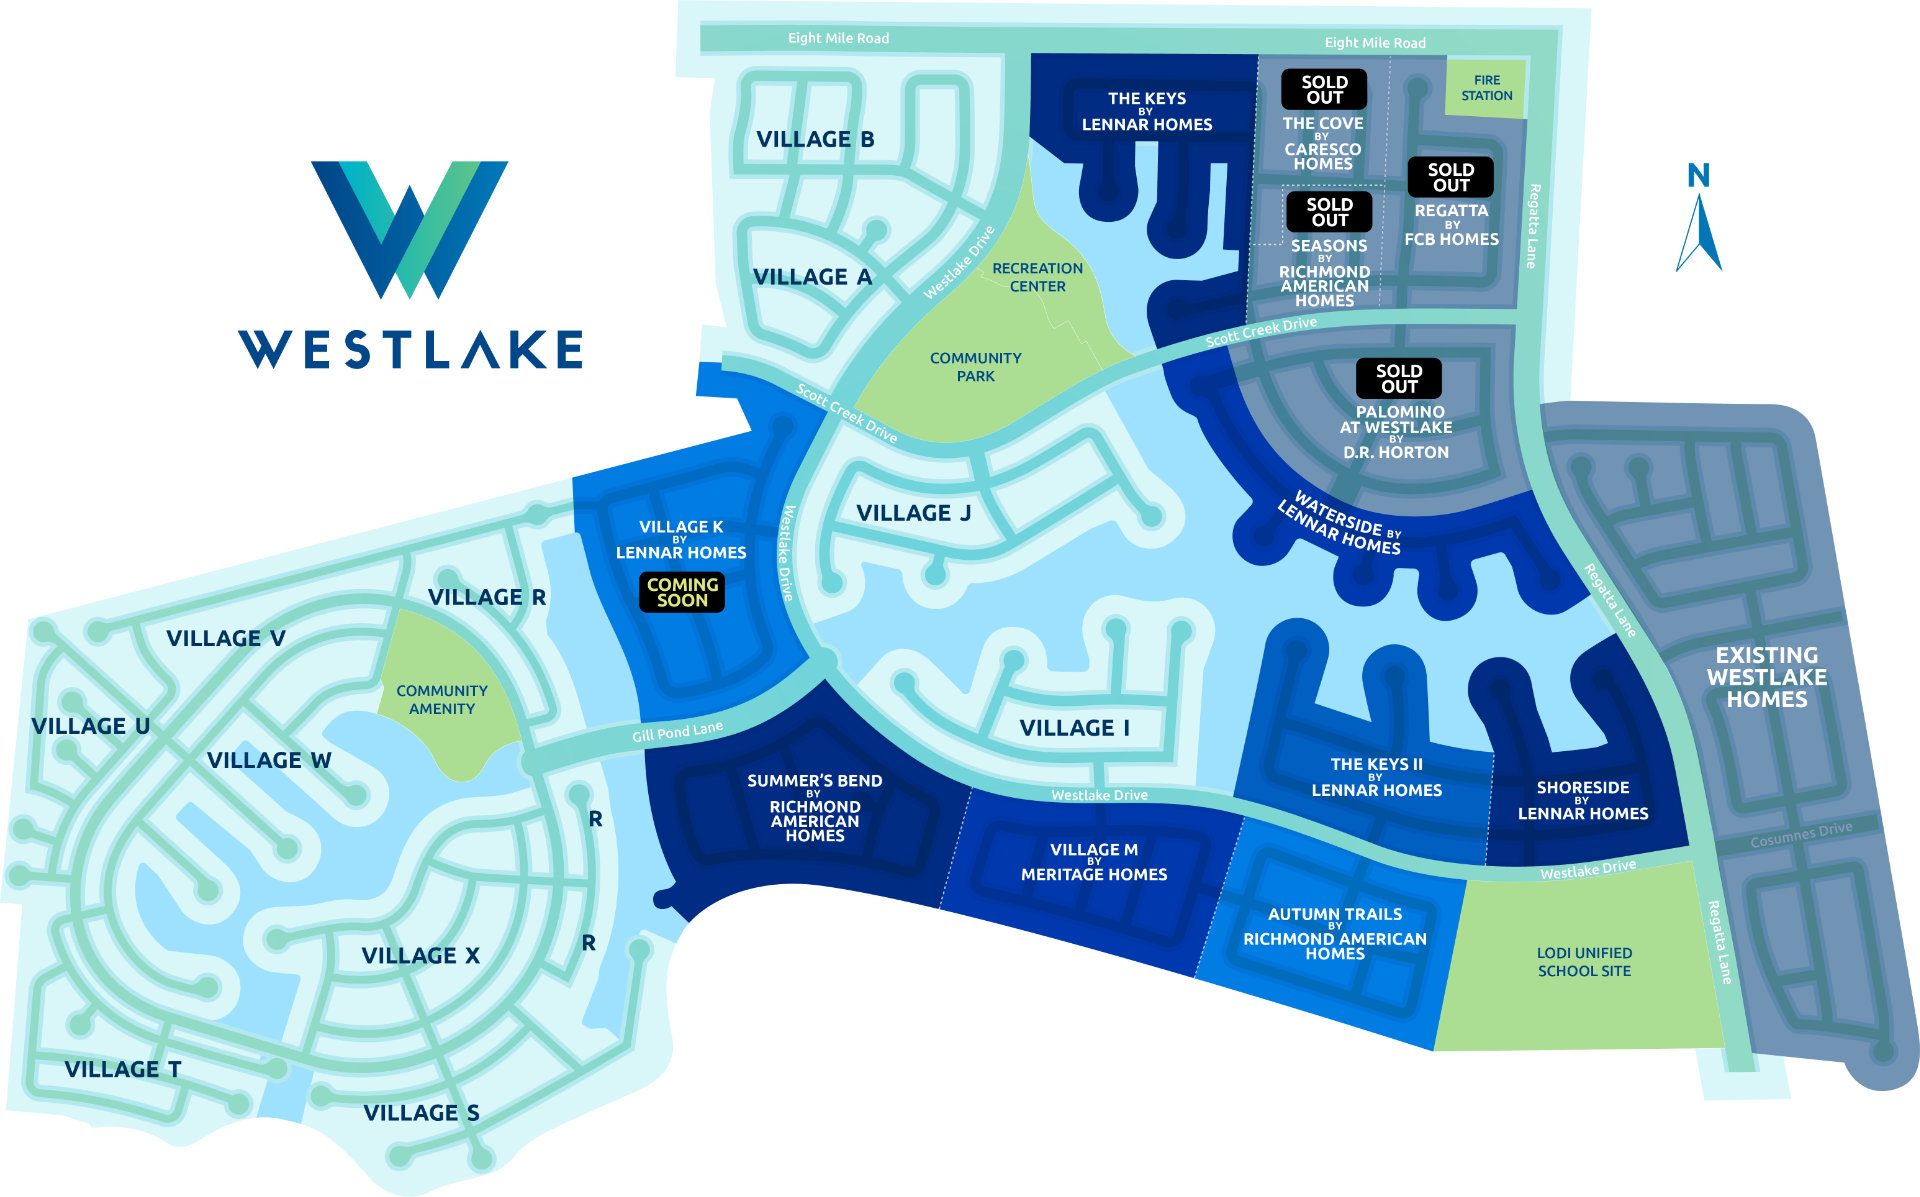 The Westlake community sitemap.